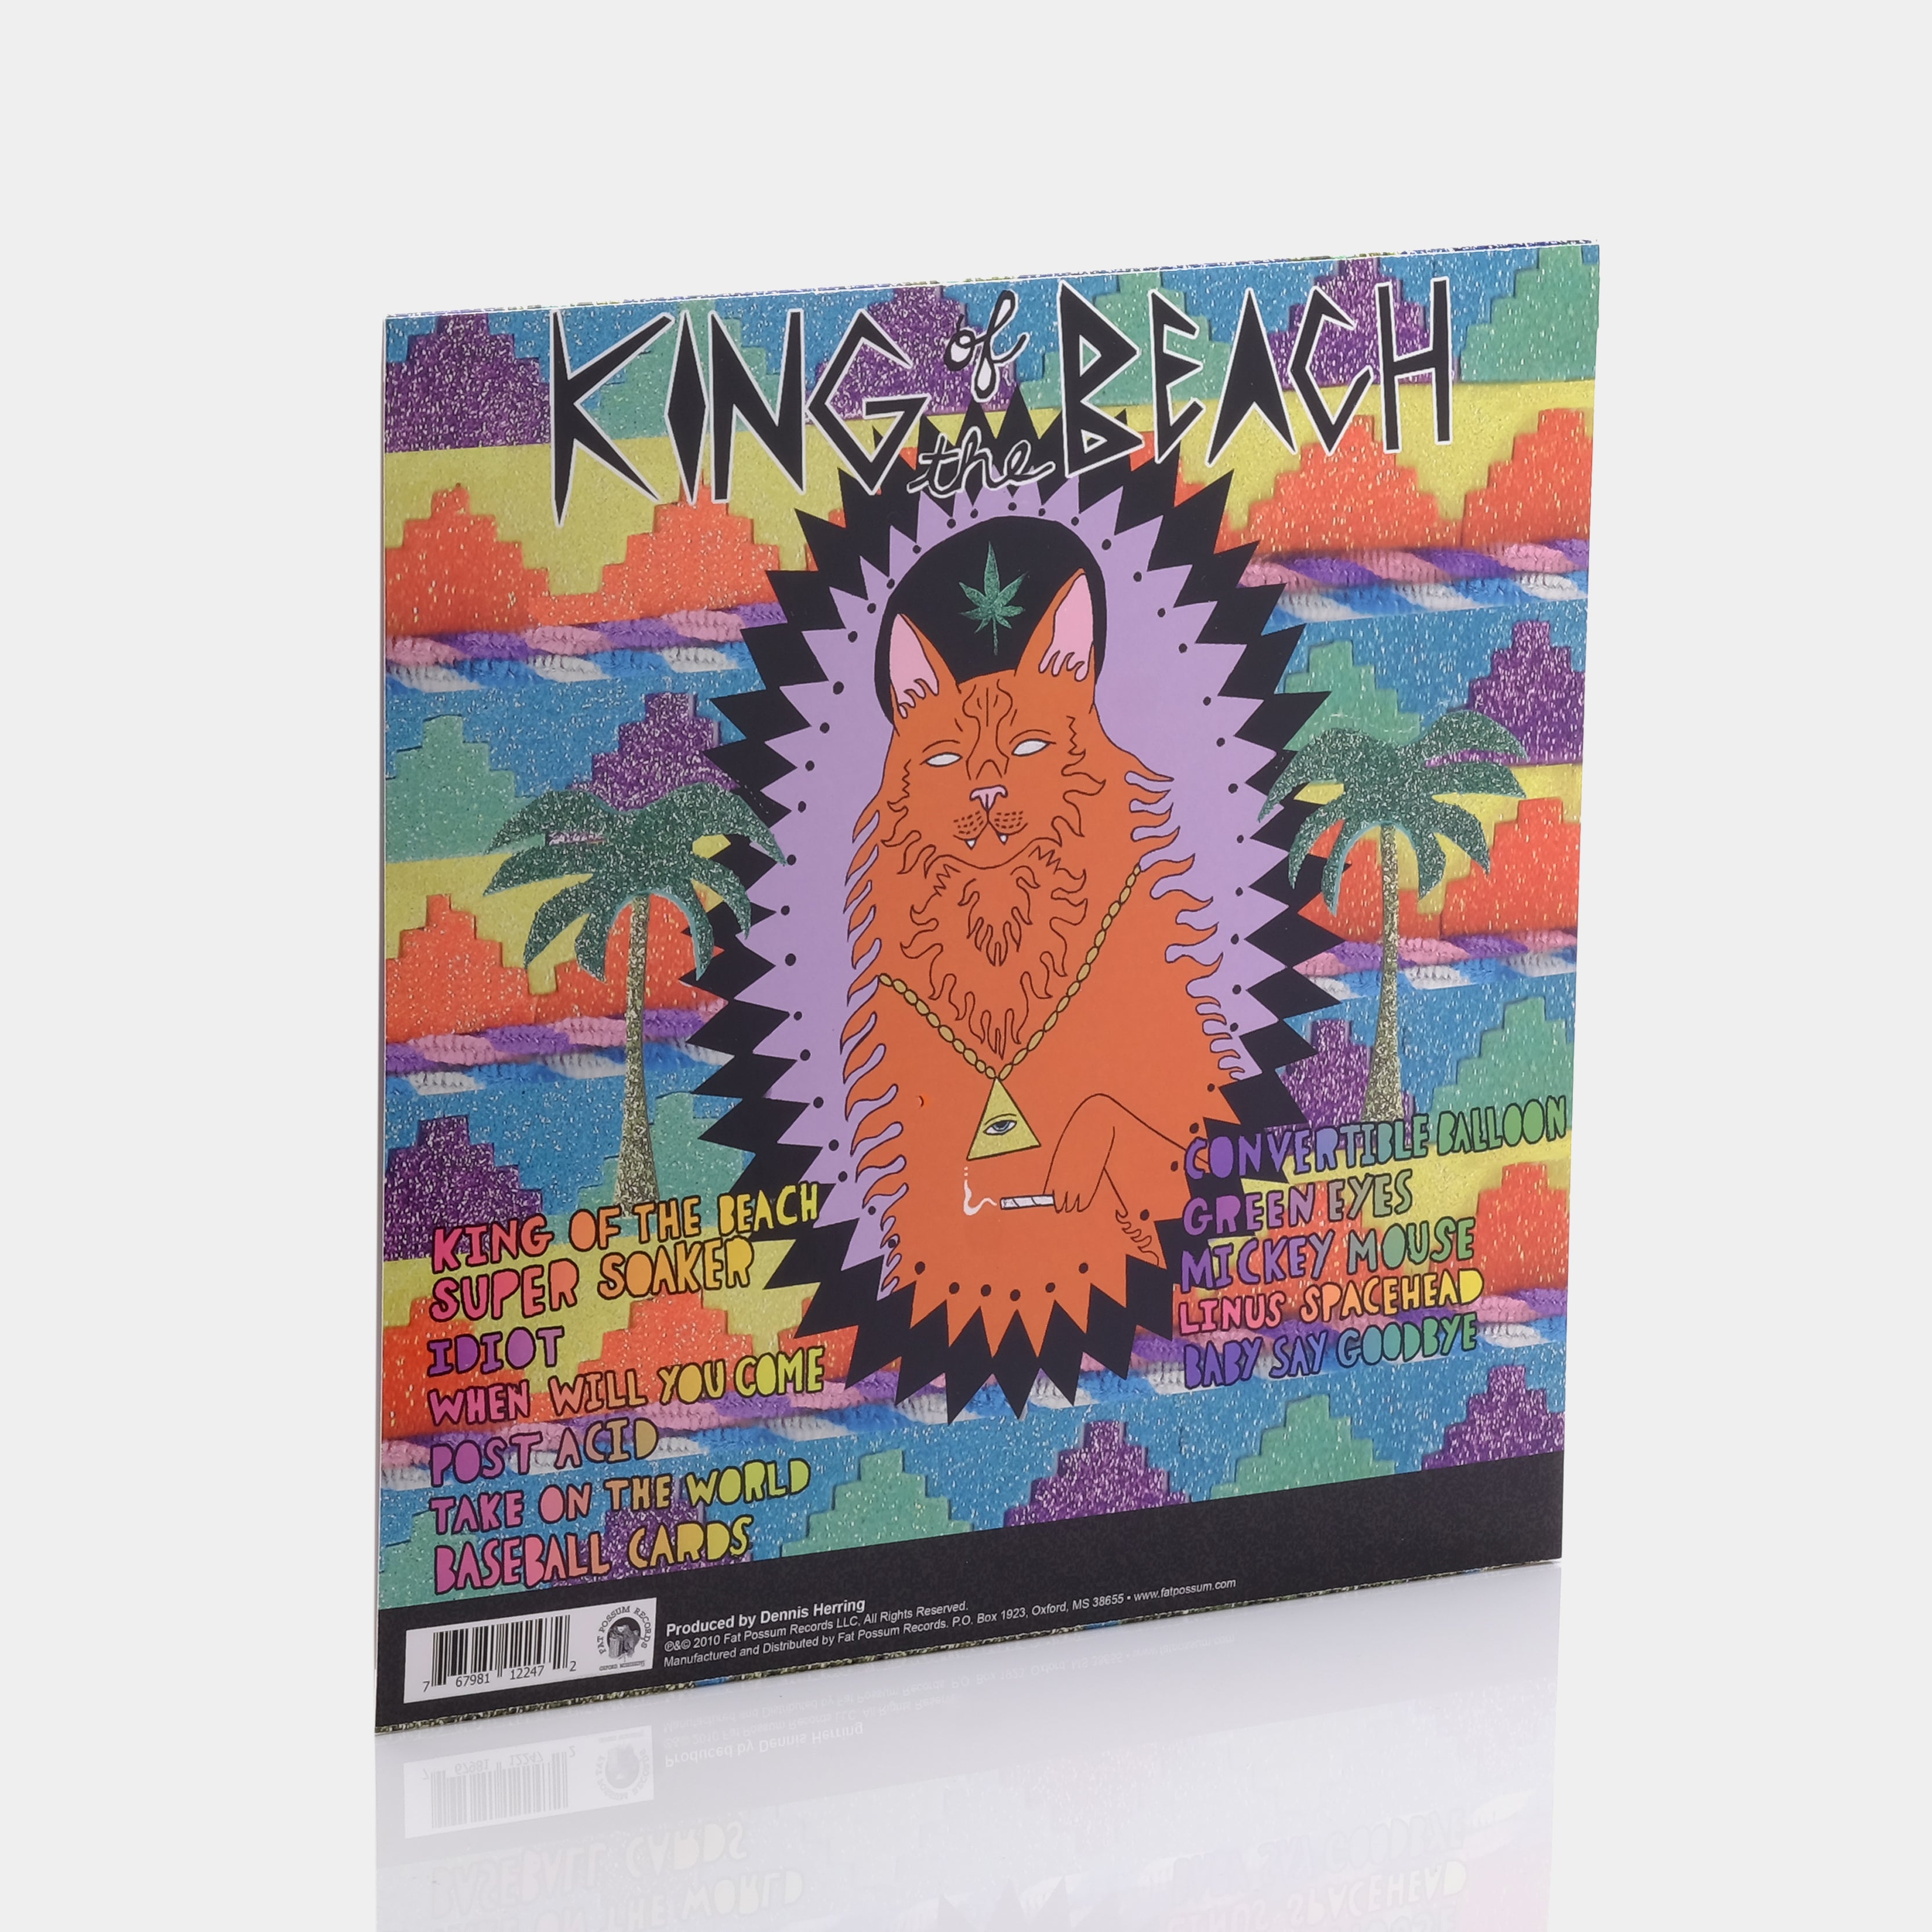 Wavves - King Of The Beach (10th Anniversary Edition) LP Purple Kush Vinyl Record + 7" Single